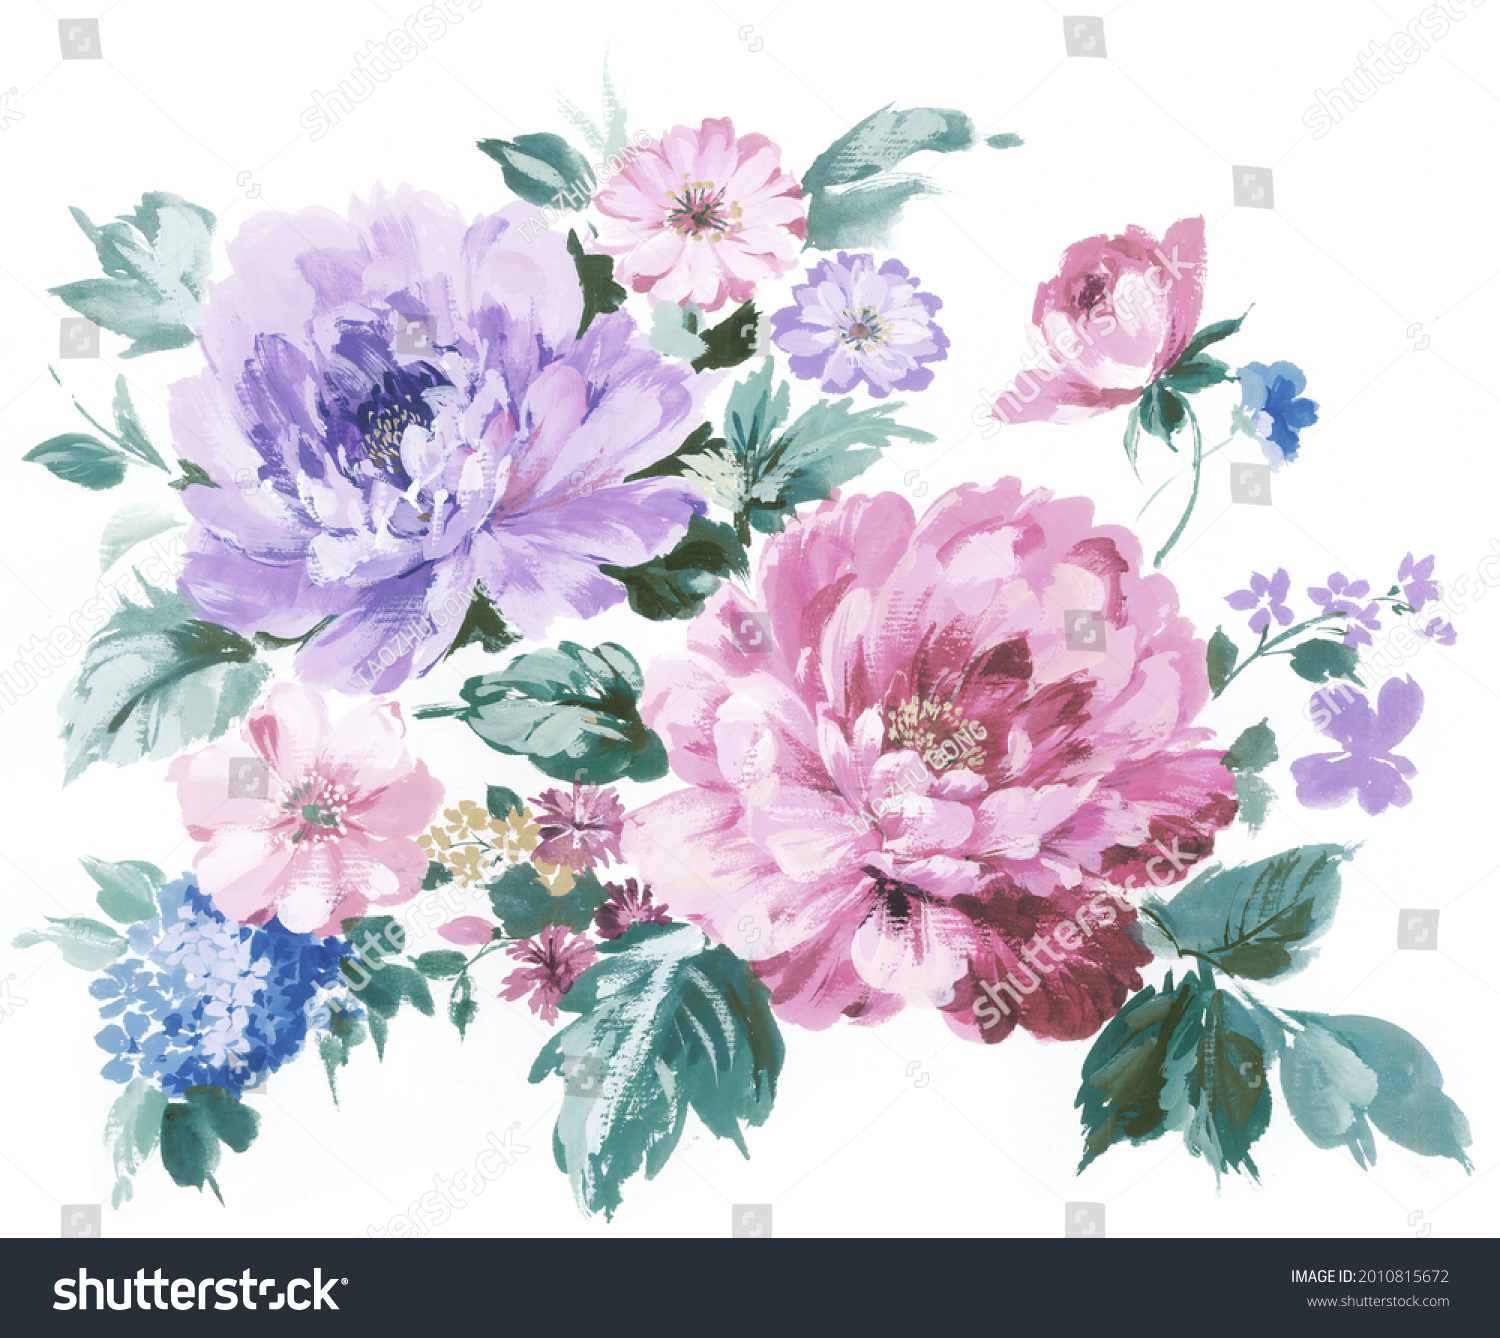 Flowers Watercolor Illustrationmanual Composition Set Watercolor Stock ...